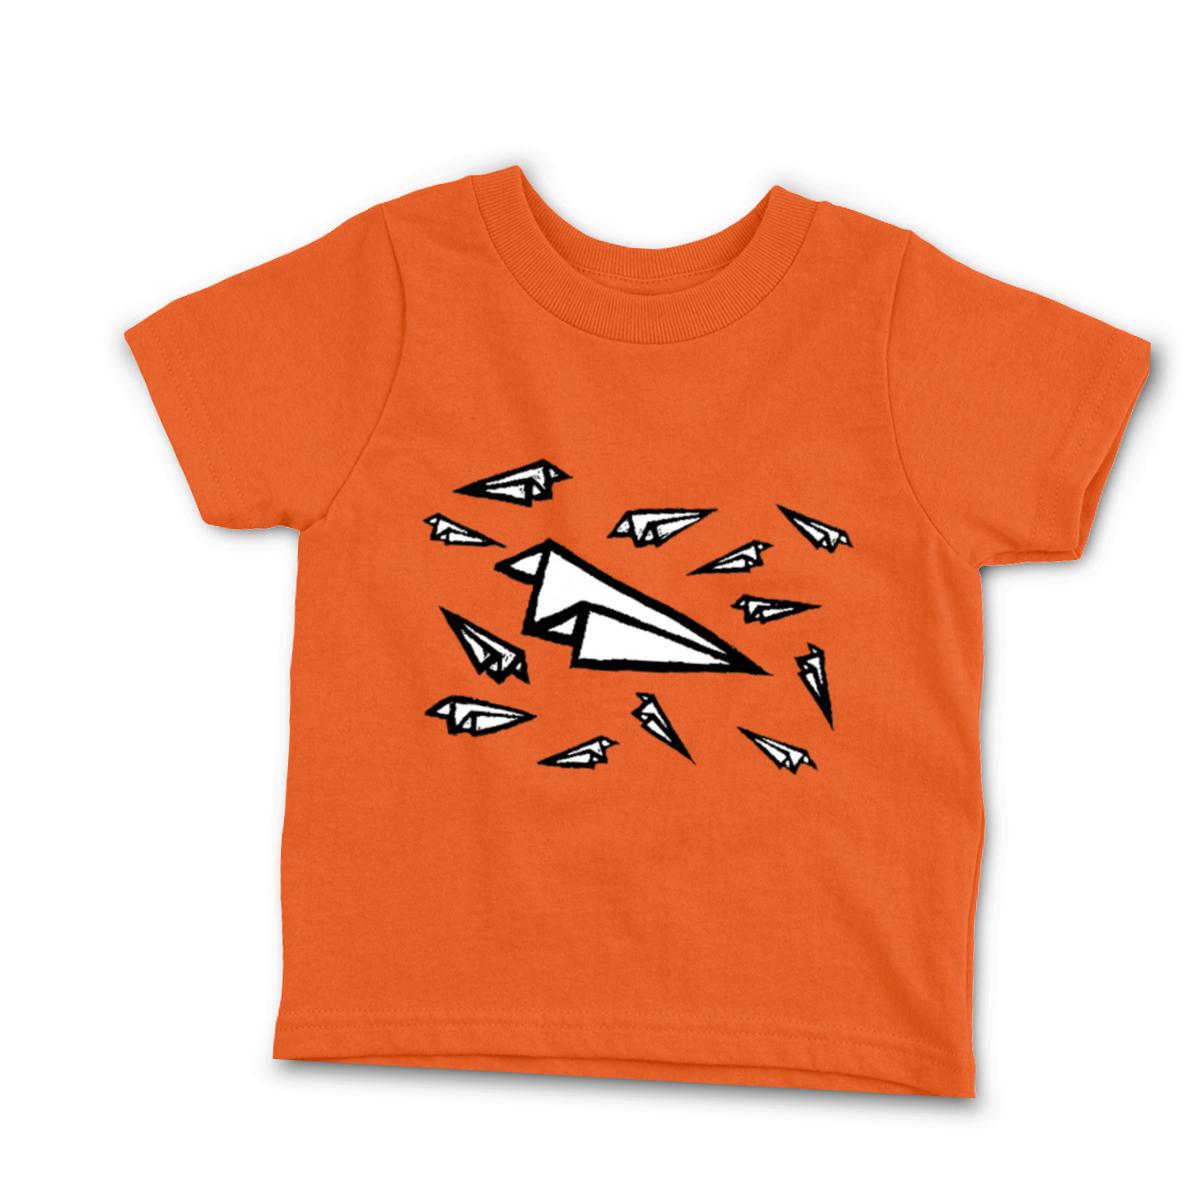 Airplane Frenzy Infant Tee 24M orange